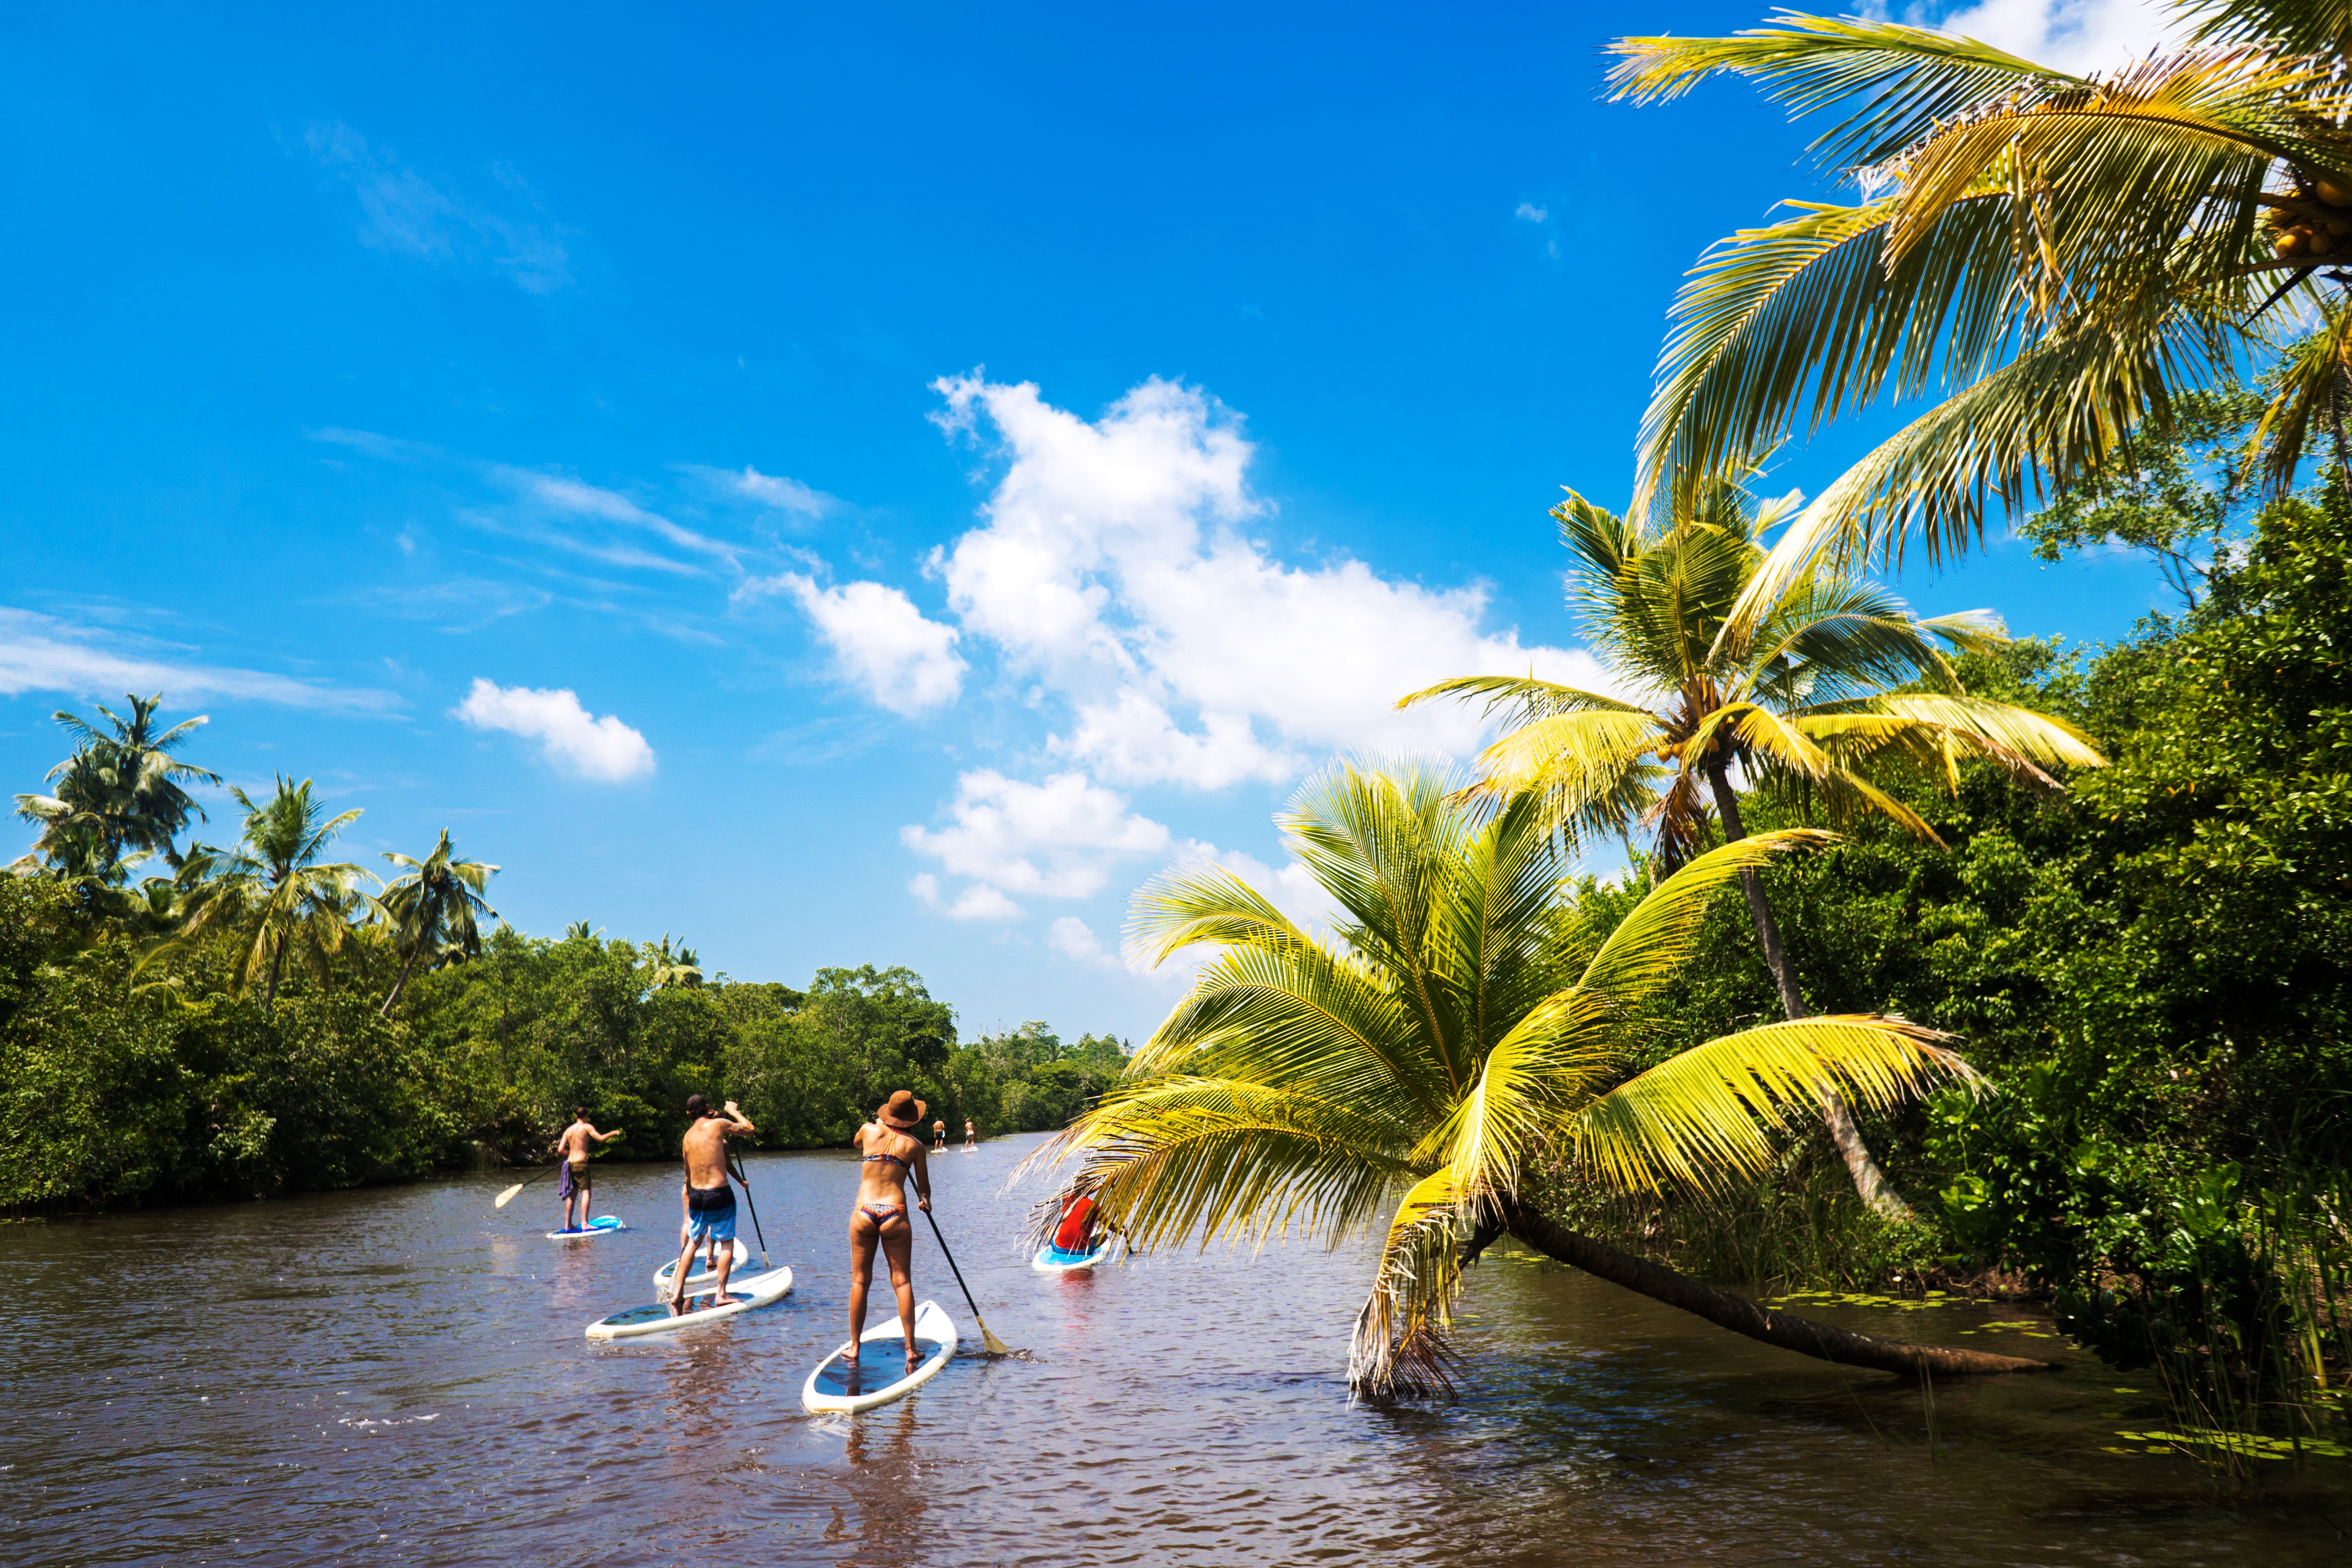 Stand Up Paddleboard "SUP"  Sri Lanka Jungle River Adventure